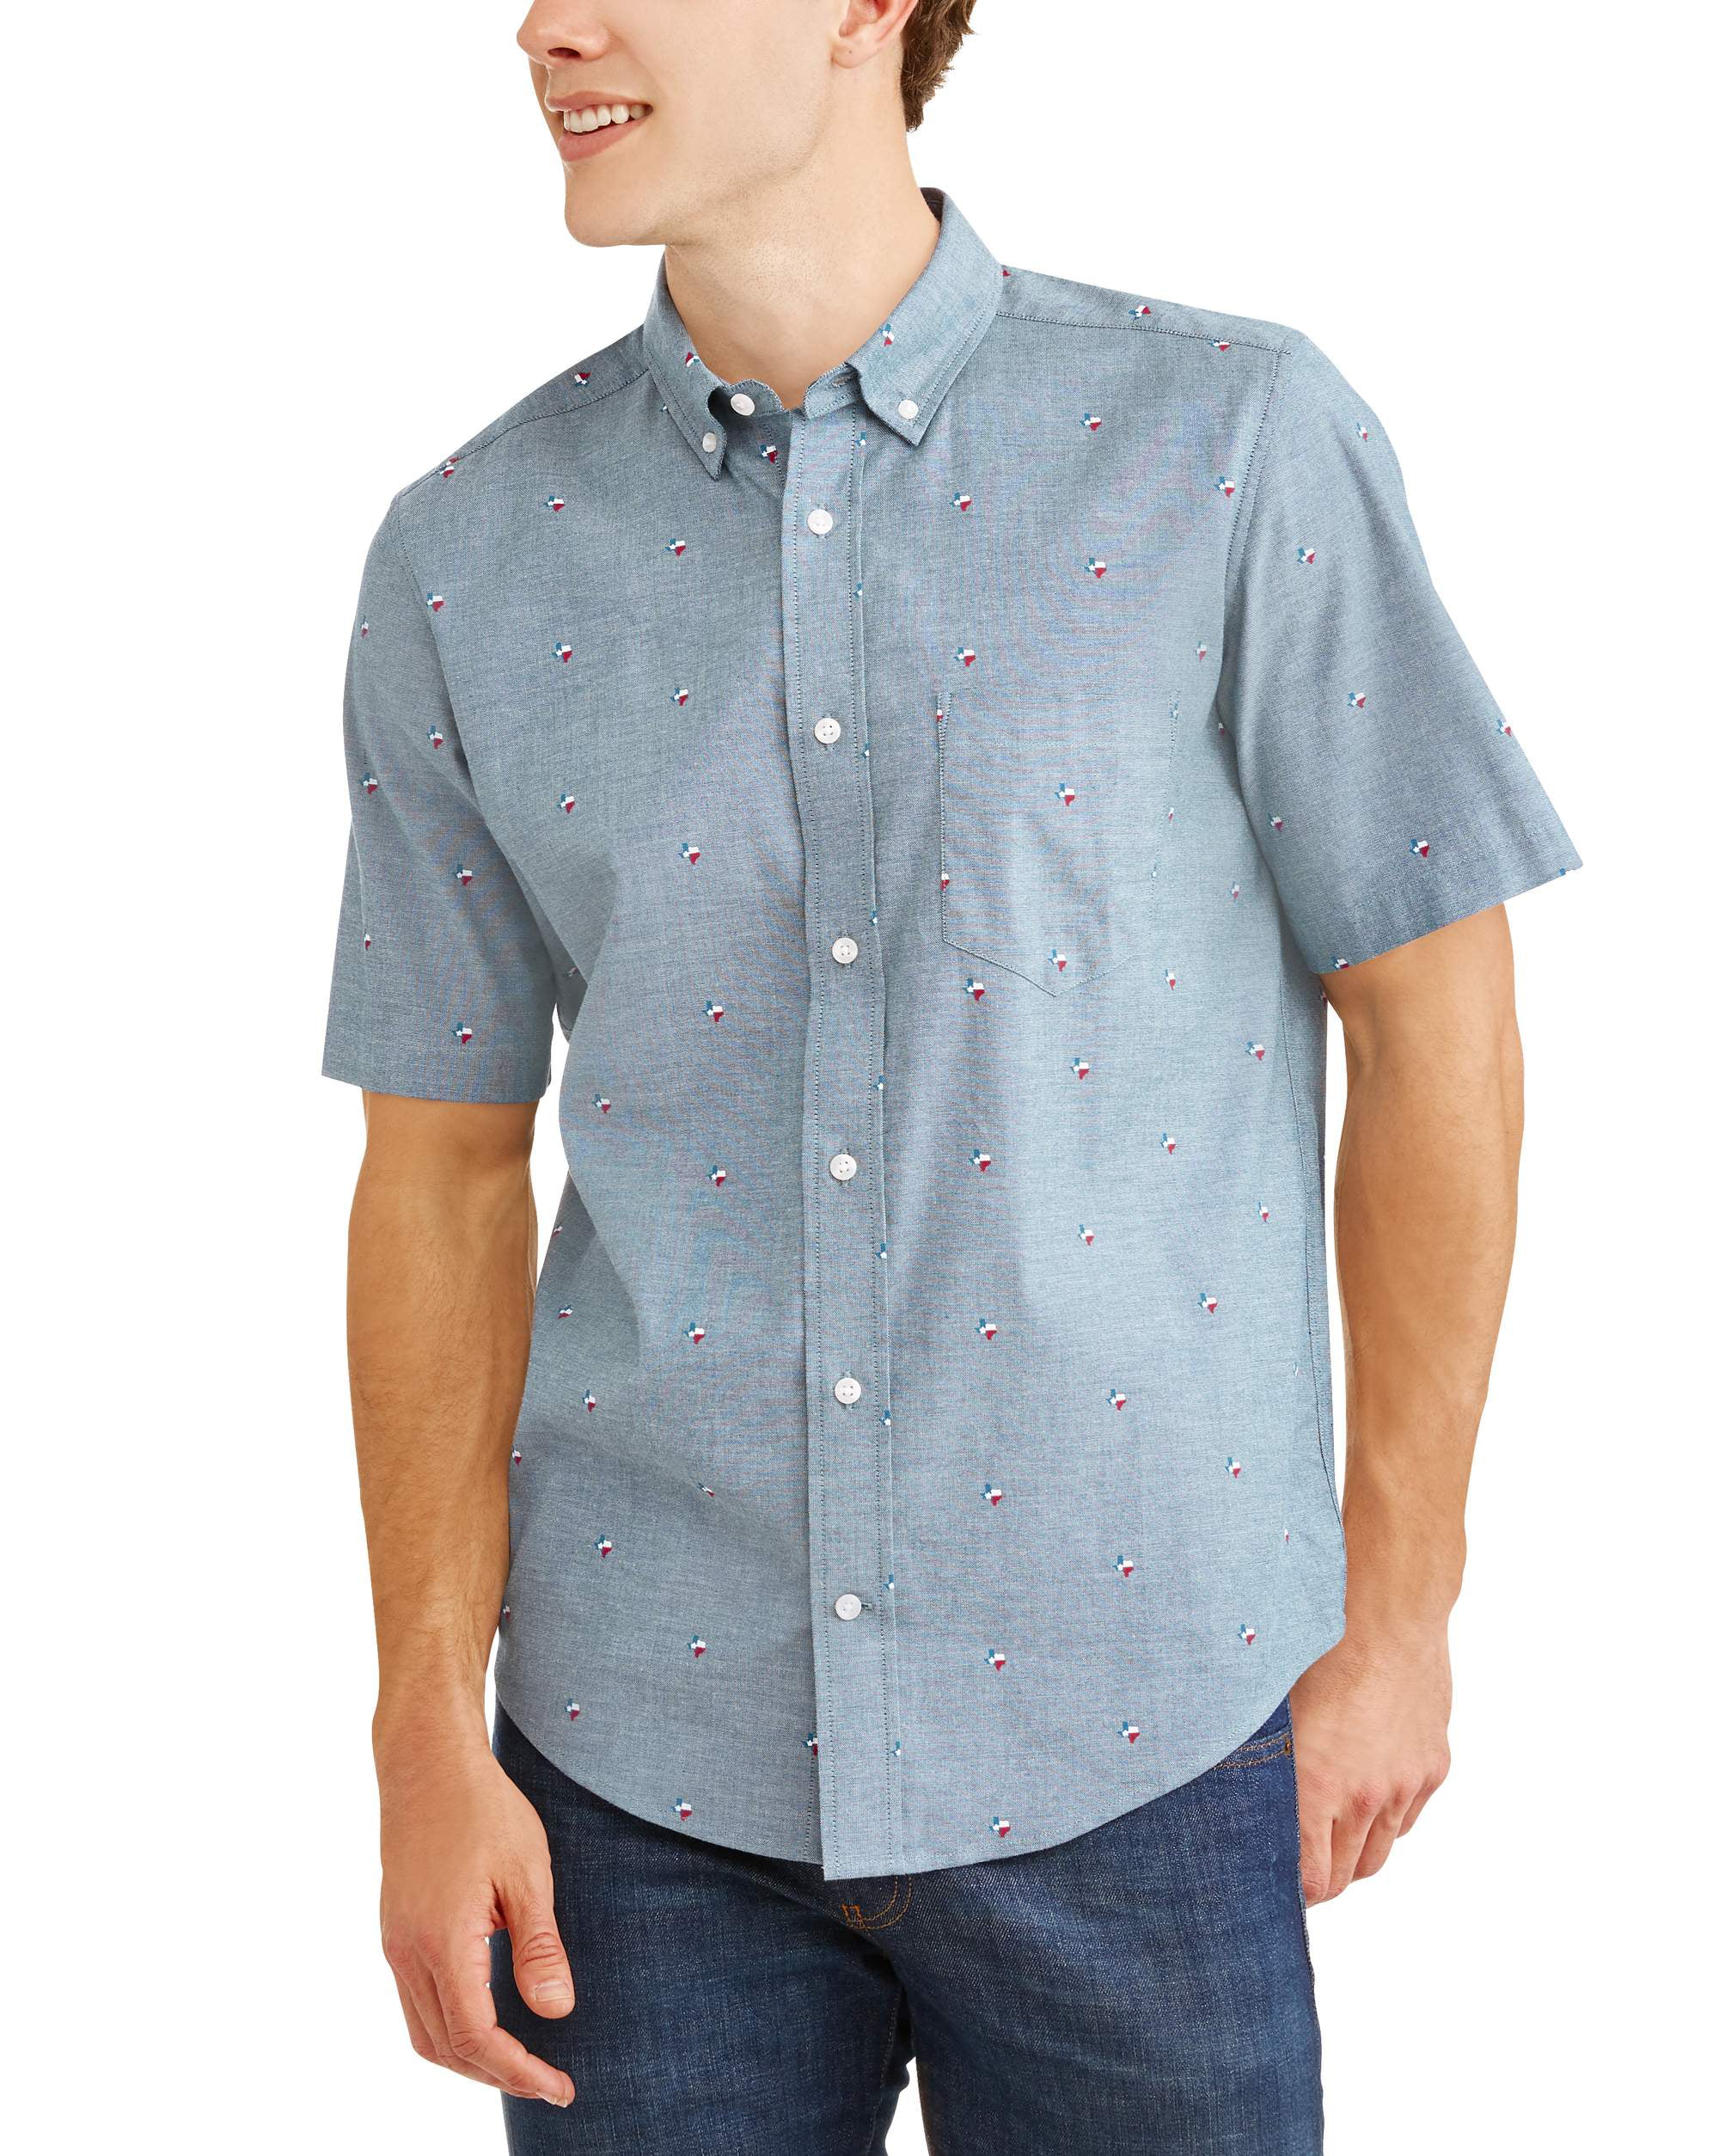 George Men's Printed Stretch Woven Shirt - Walmart.com